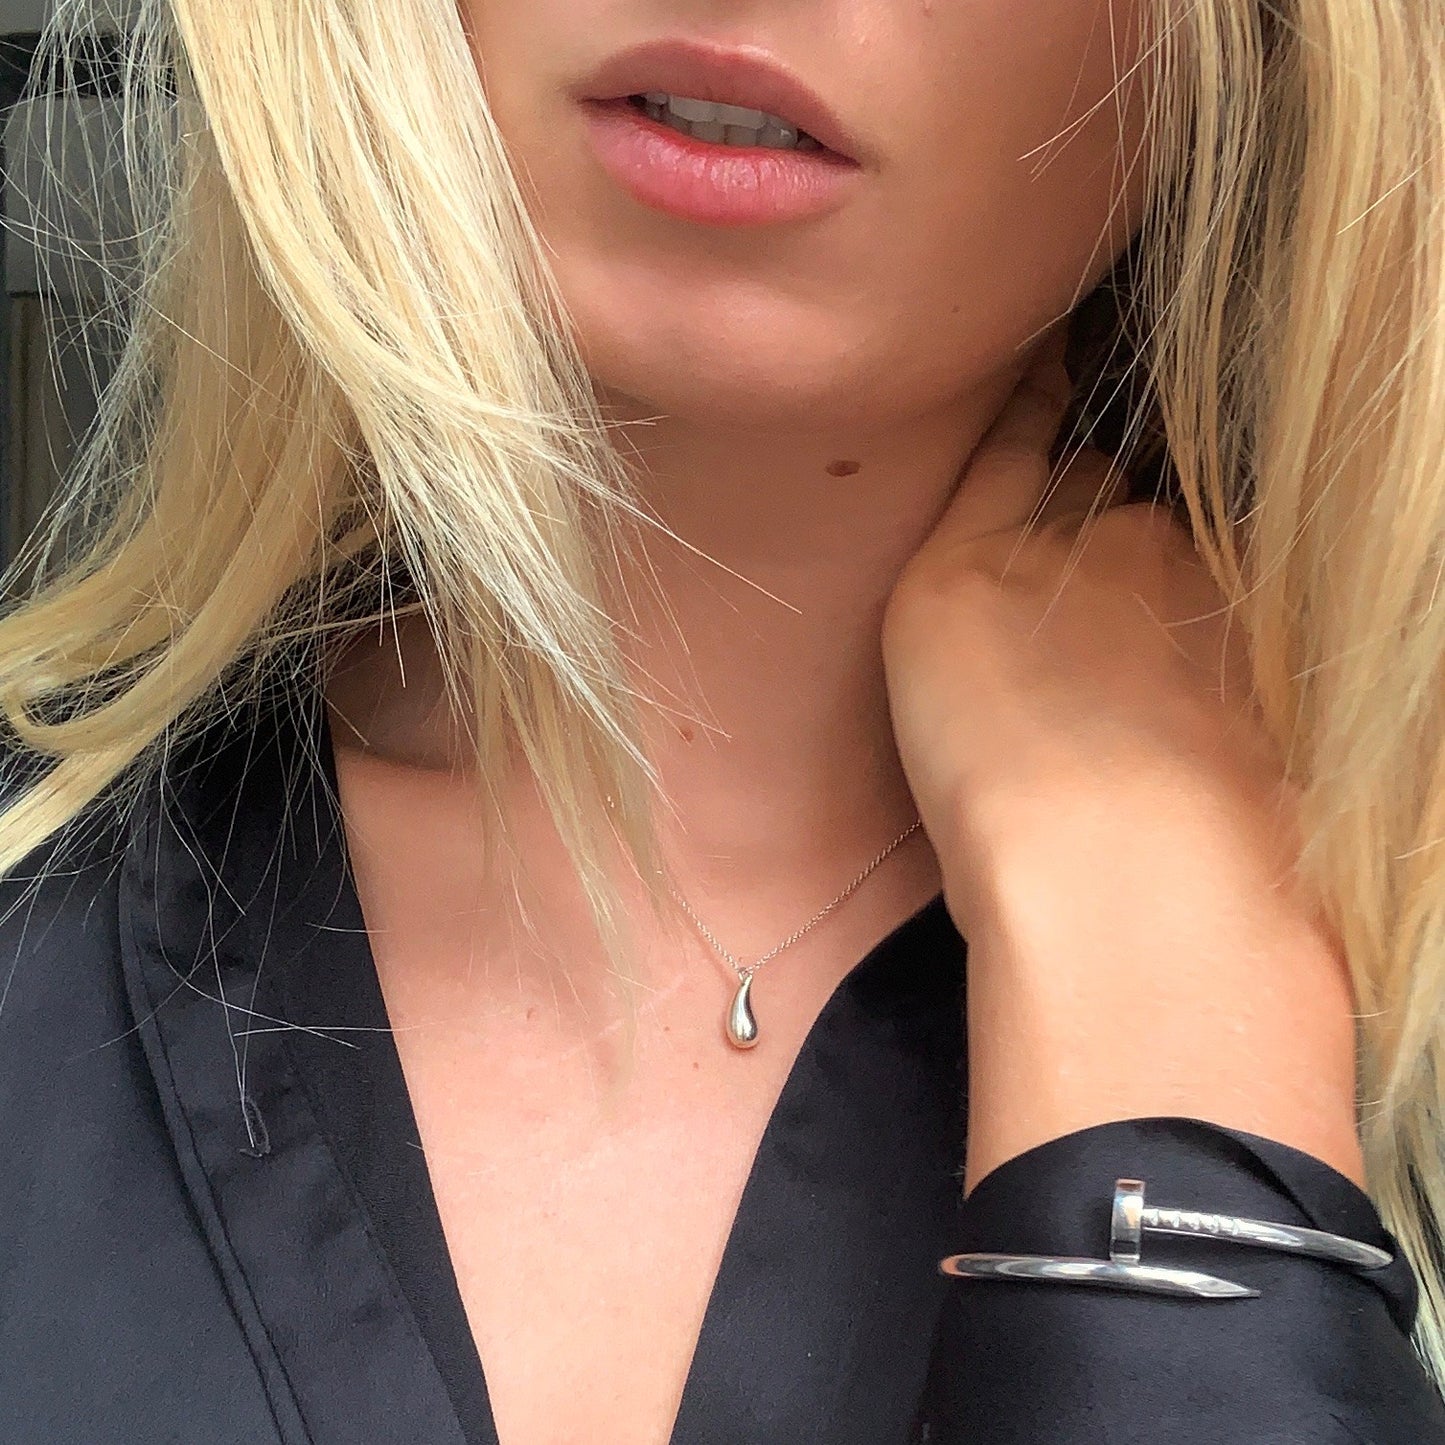 Tiffany & Co Teardrop Elsa Peretti necklace